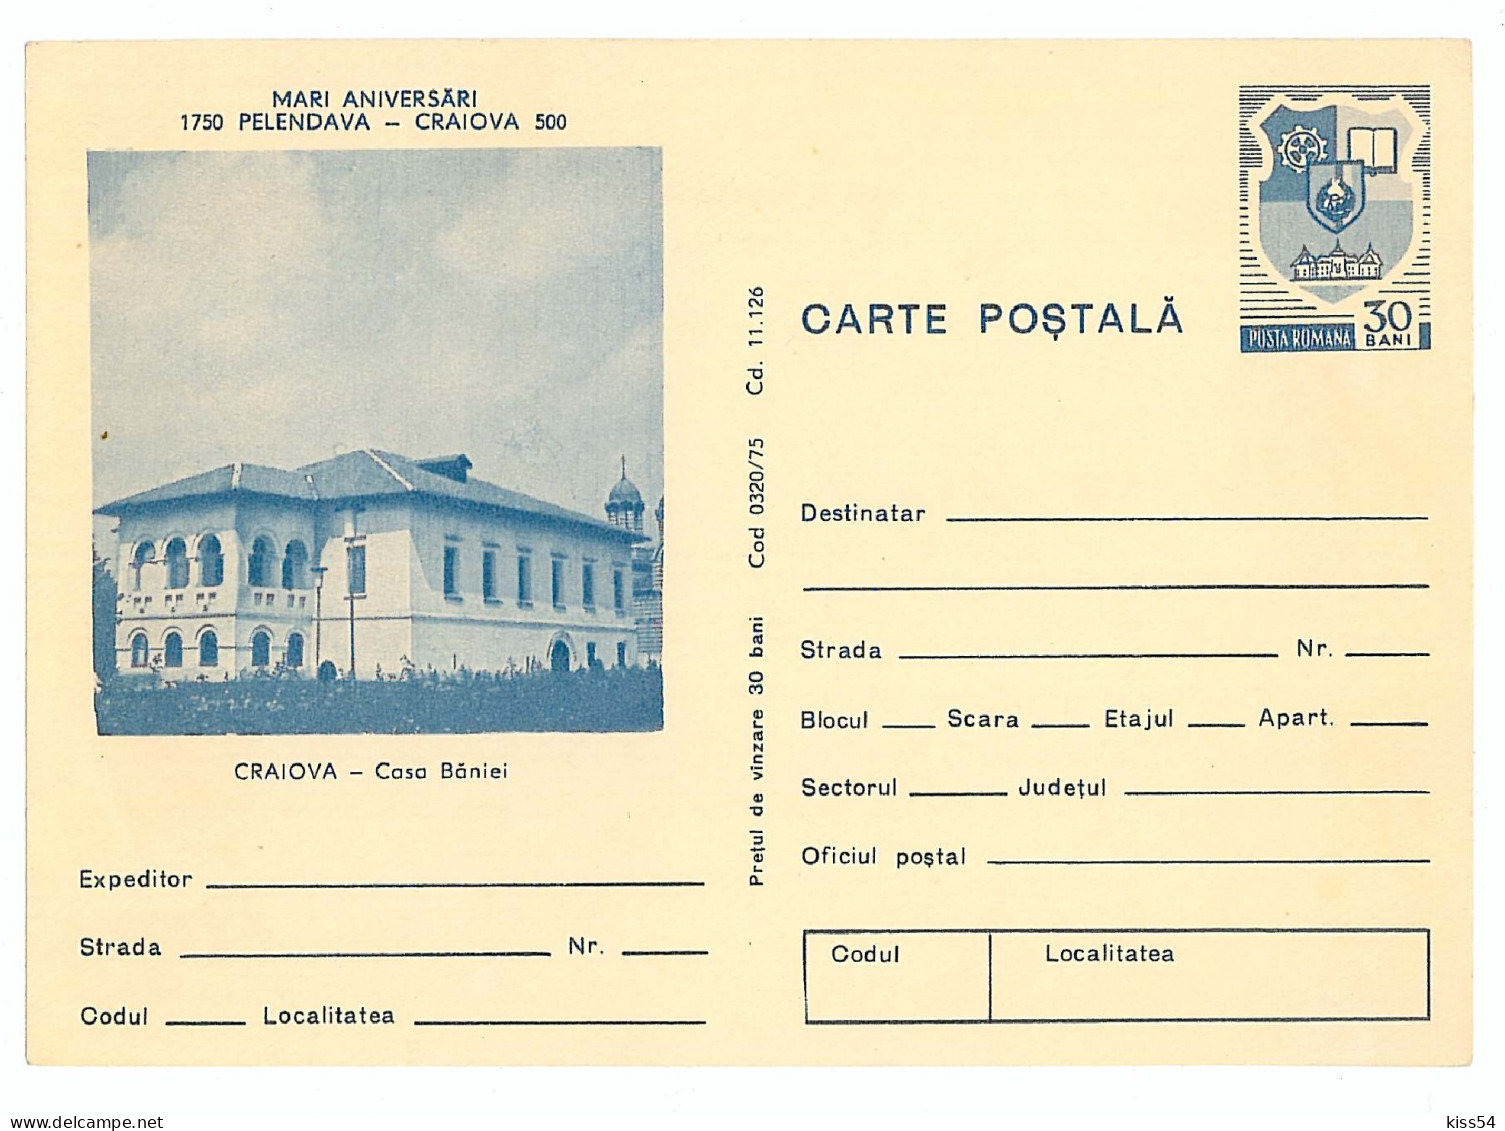 IP 75 - 320 CRAIOVA, Baniei House - Stationery - Unused - 1975 - Postal Stationery